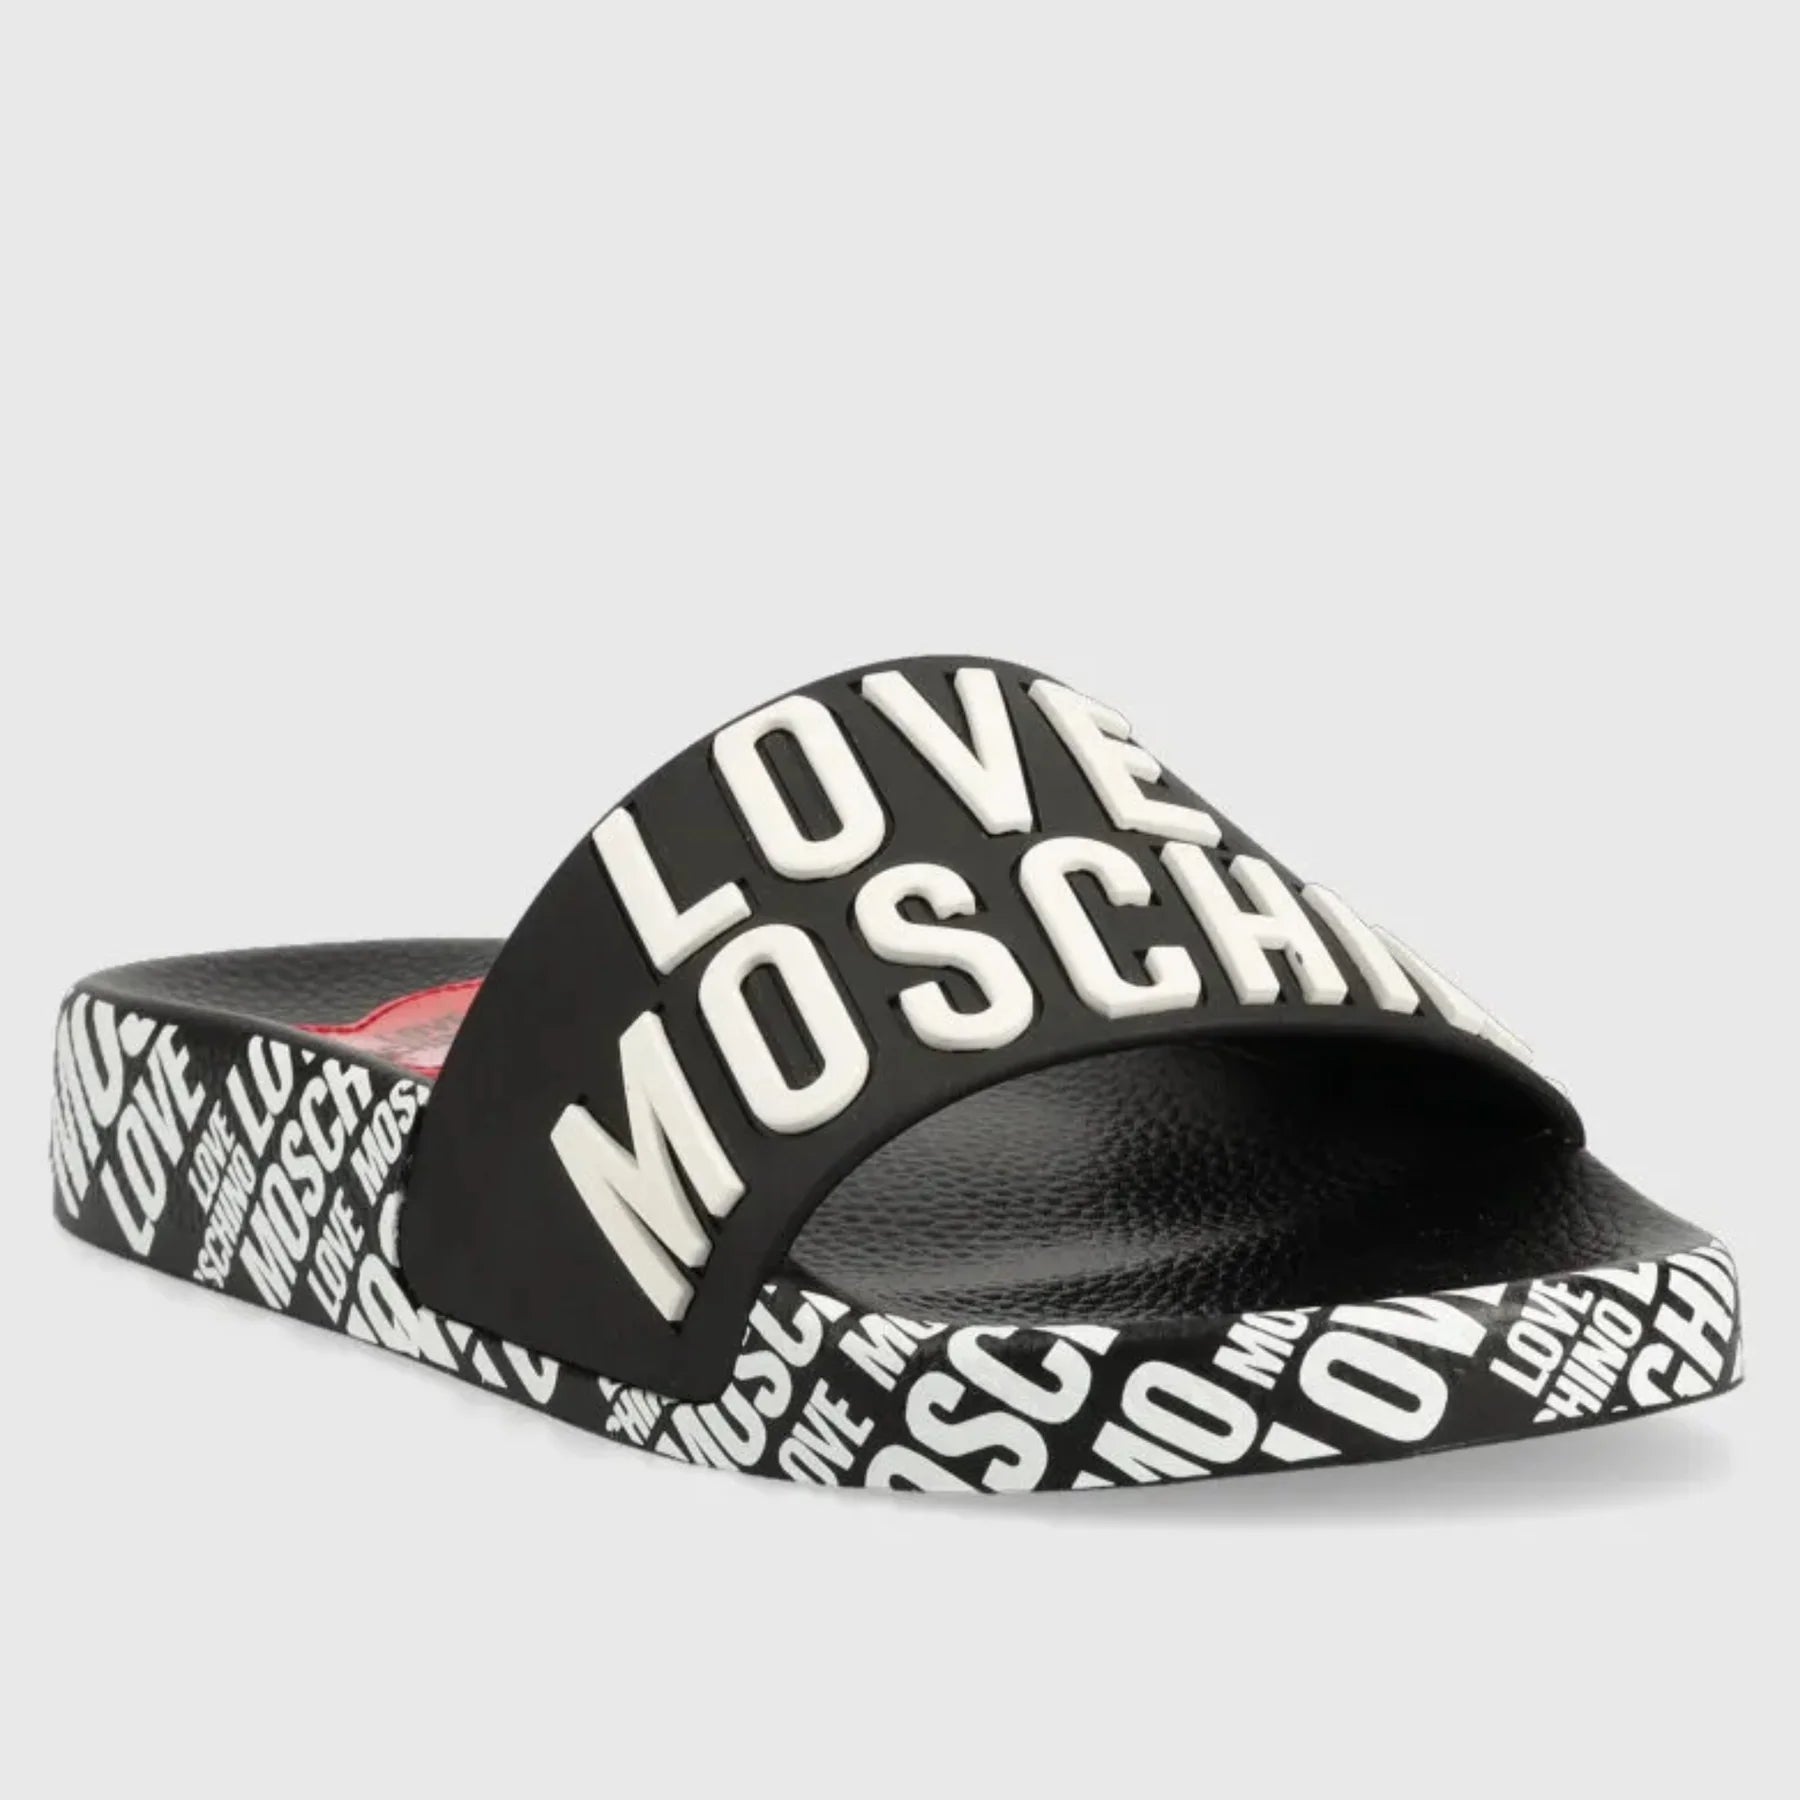 Love Moschino Flip Flops